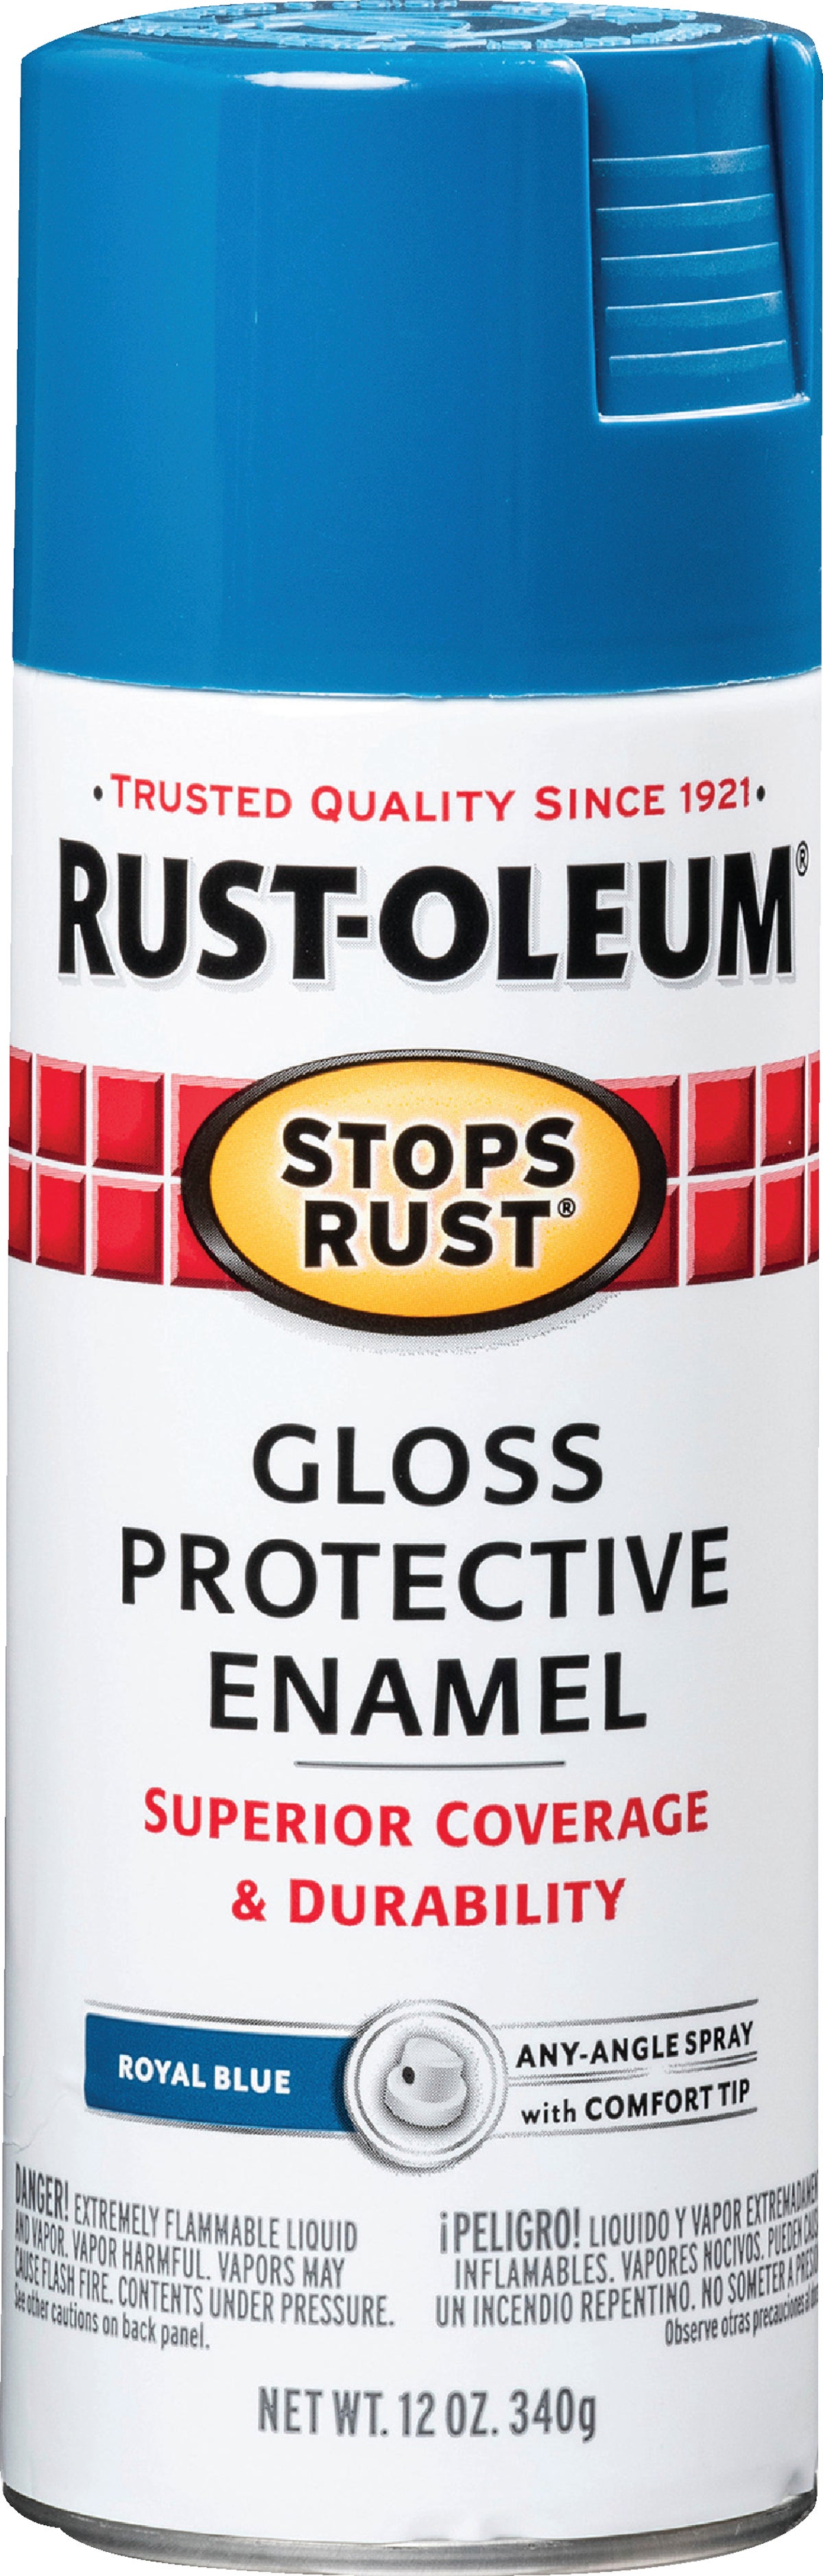 Rust-Oleum 12 oz Stops Rust Protective Enamel Spray Paint - Gloss Antique White